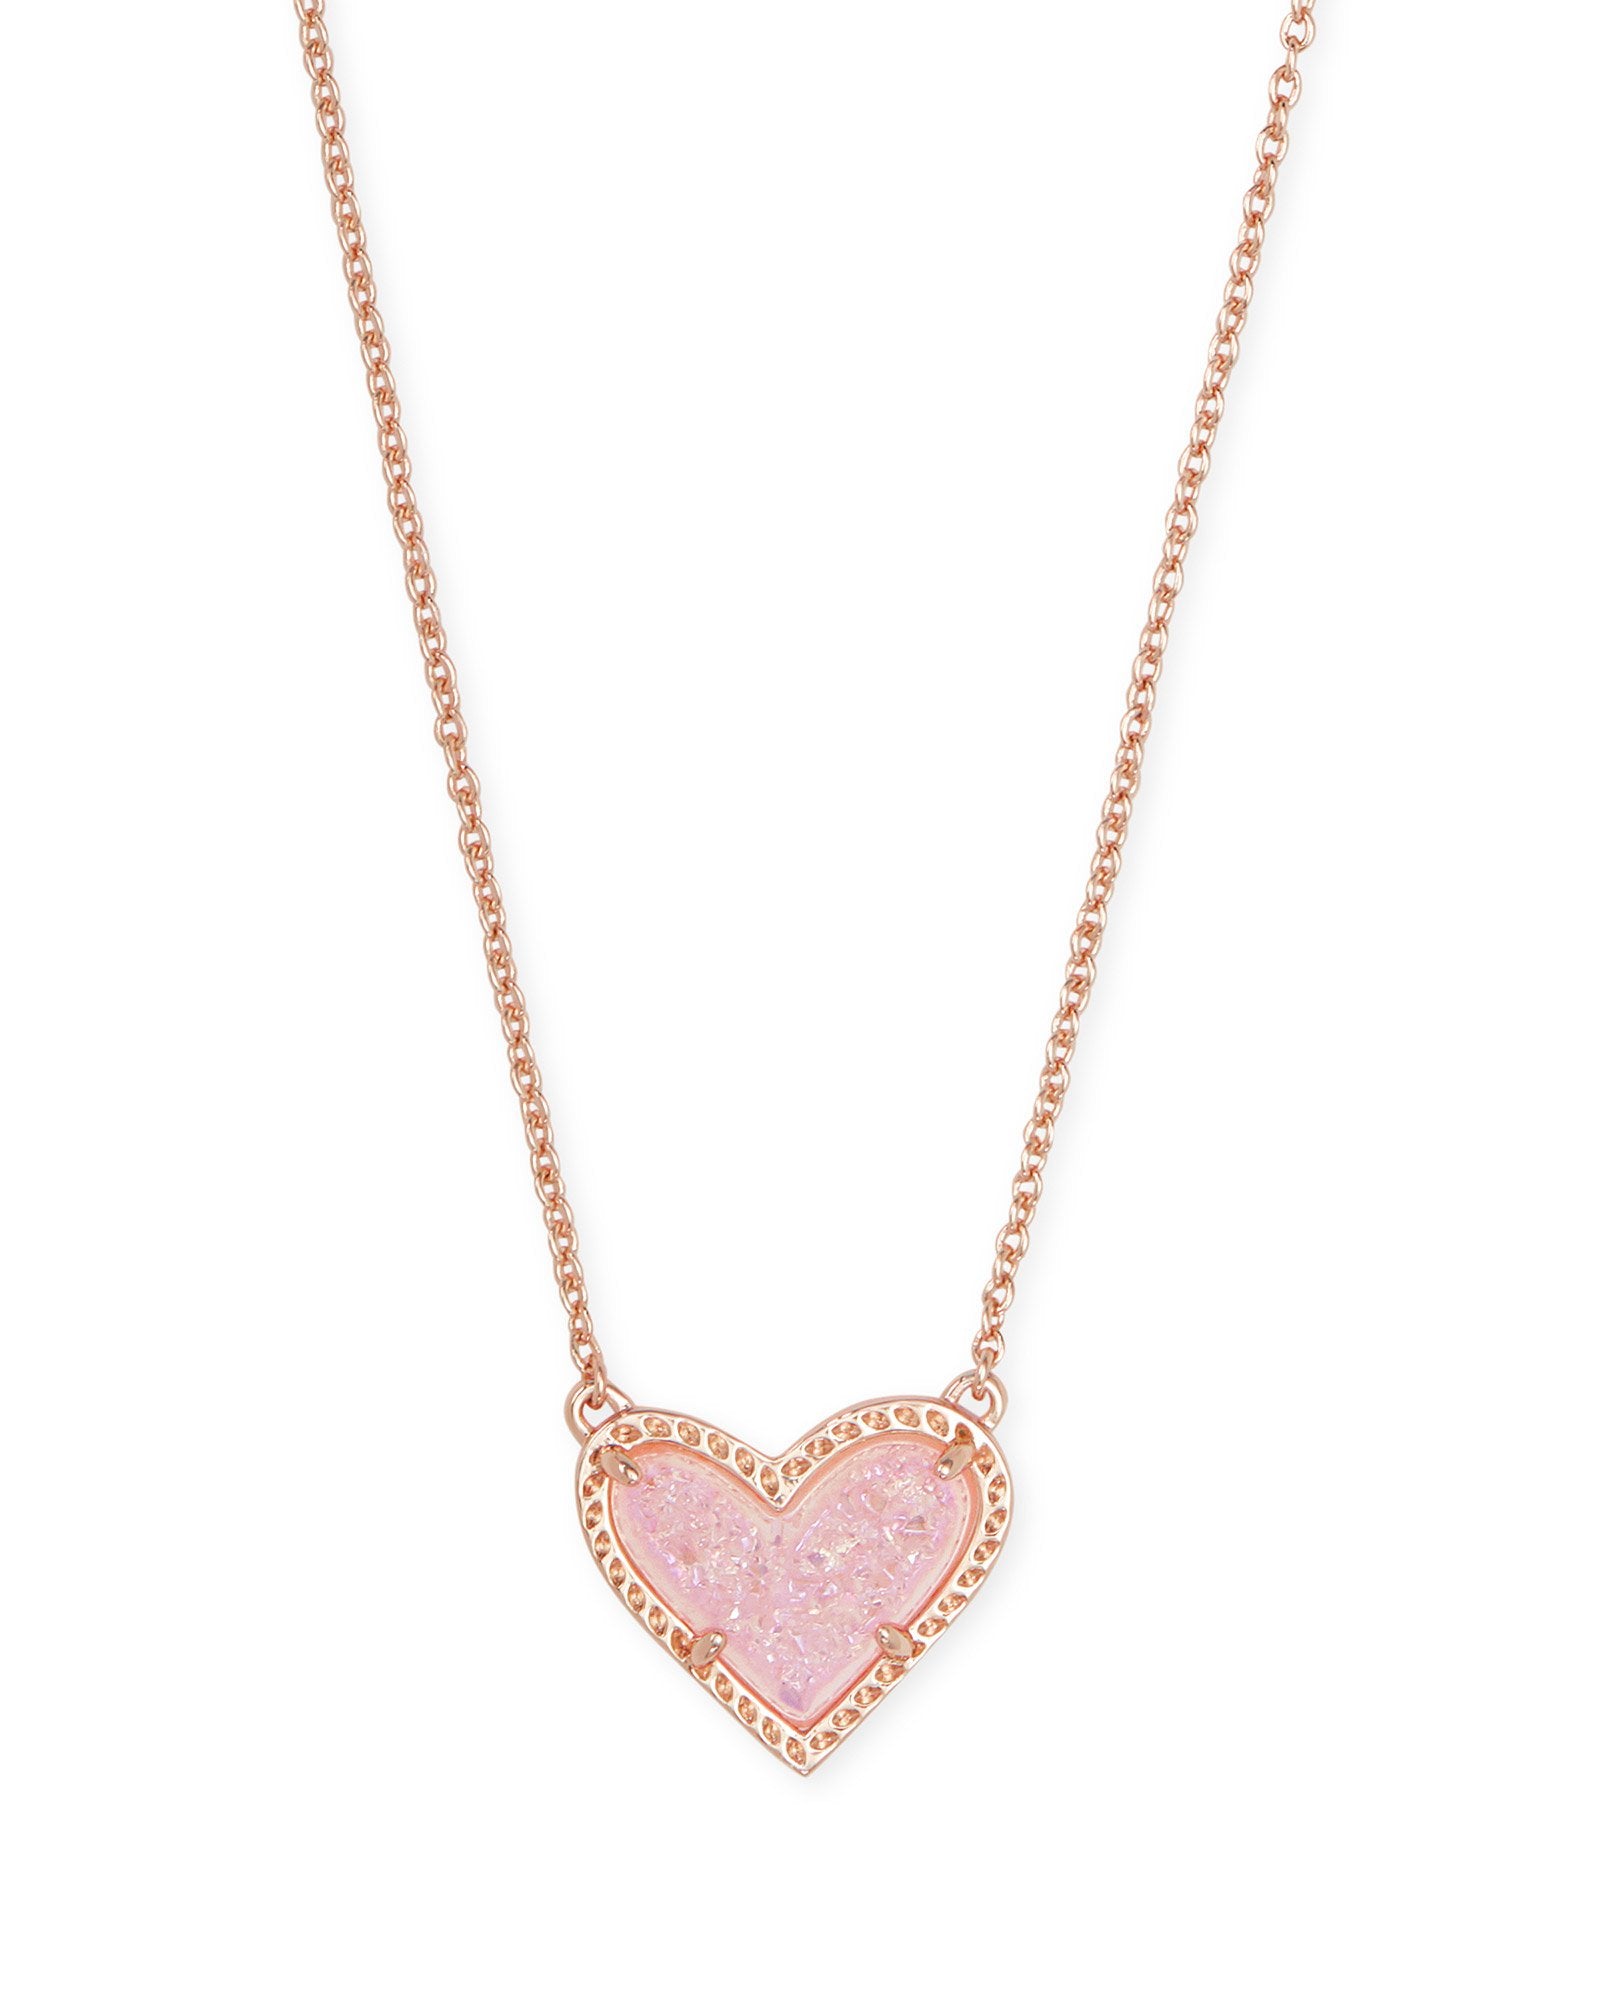 Ari Heart Drusy Necklace - More Colors